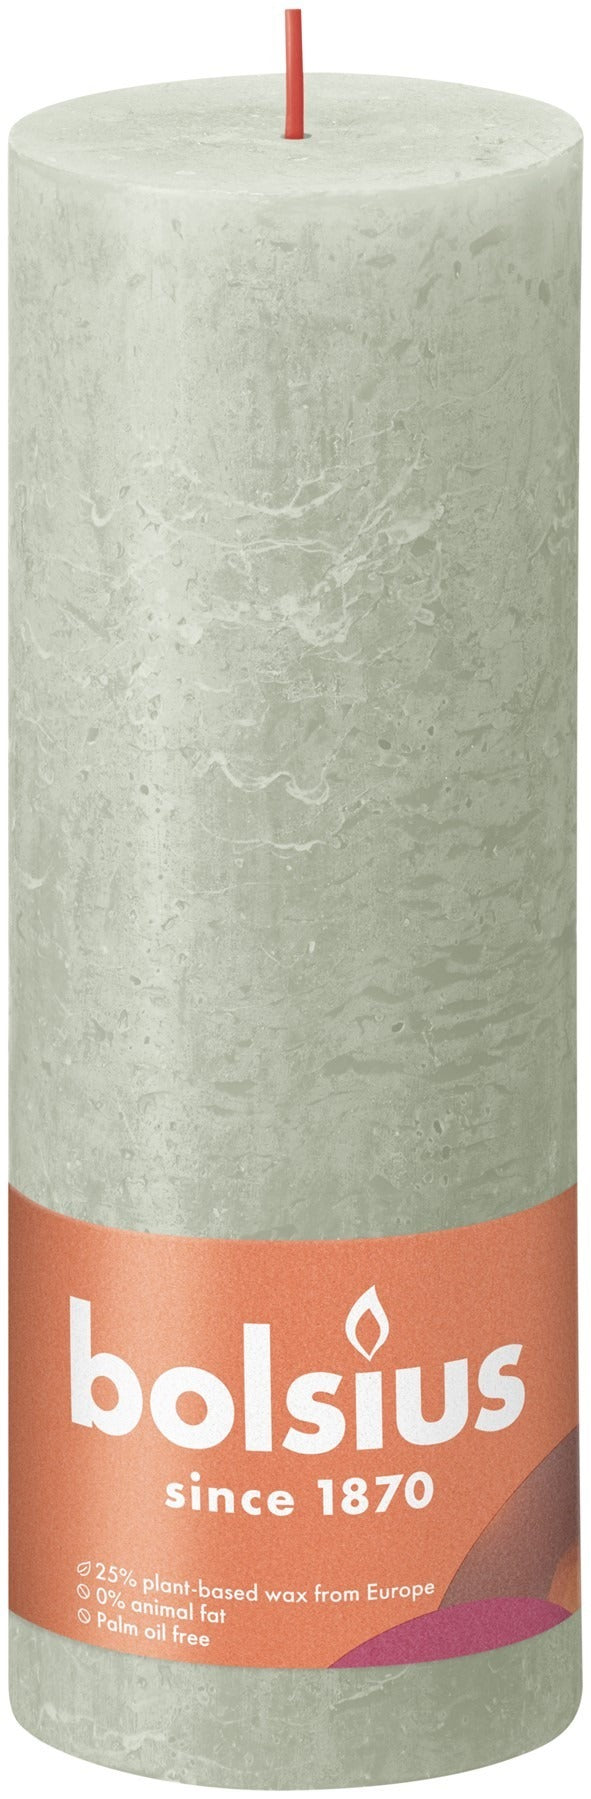 View Foggy Green Bolsius Rustic Shine Pillar Candle 190 x 68 mm information